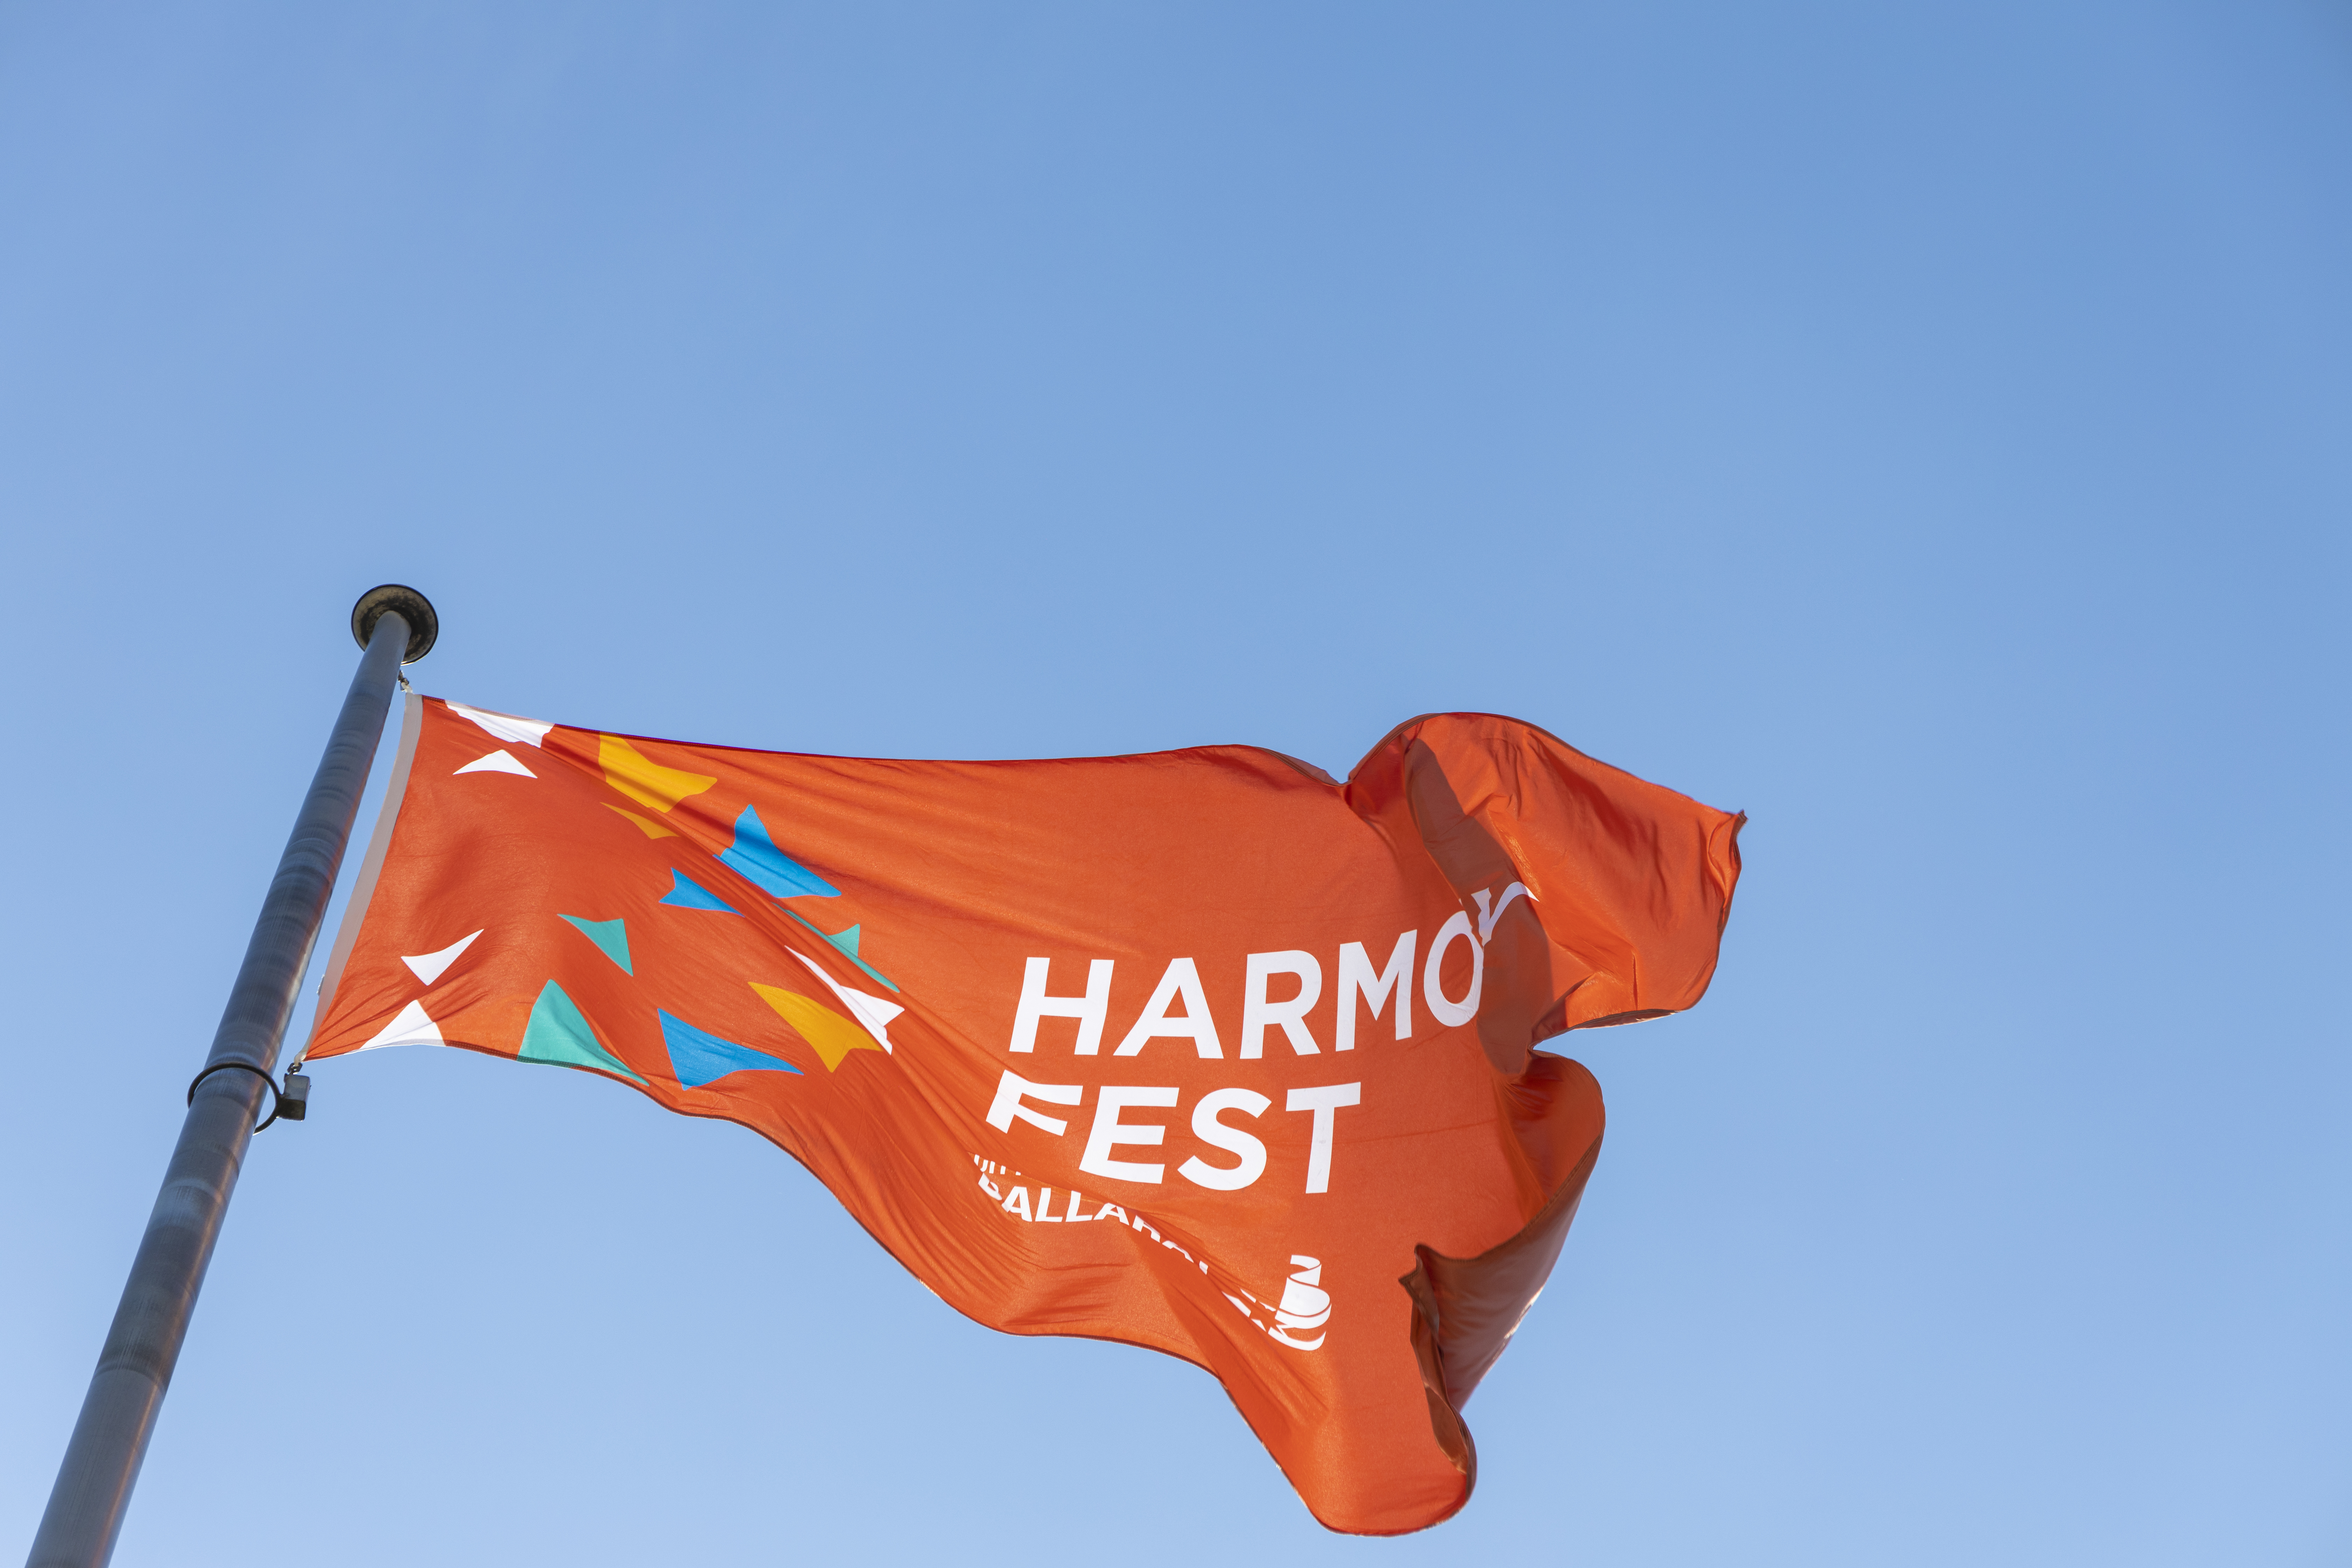 An orange flag with Harmony Fest text flying against a clear blue sky